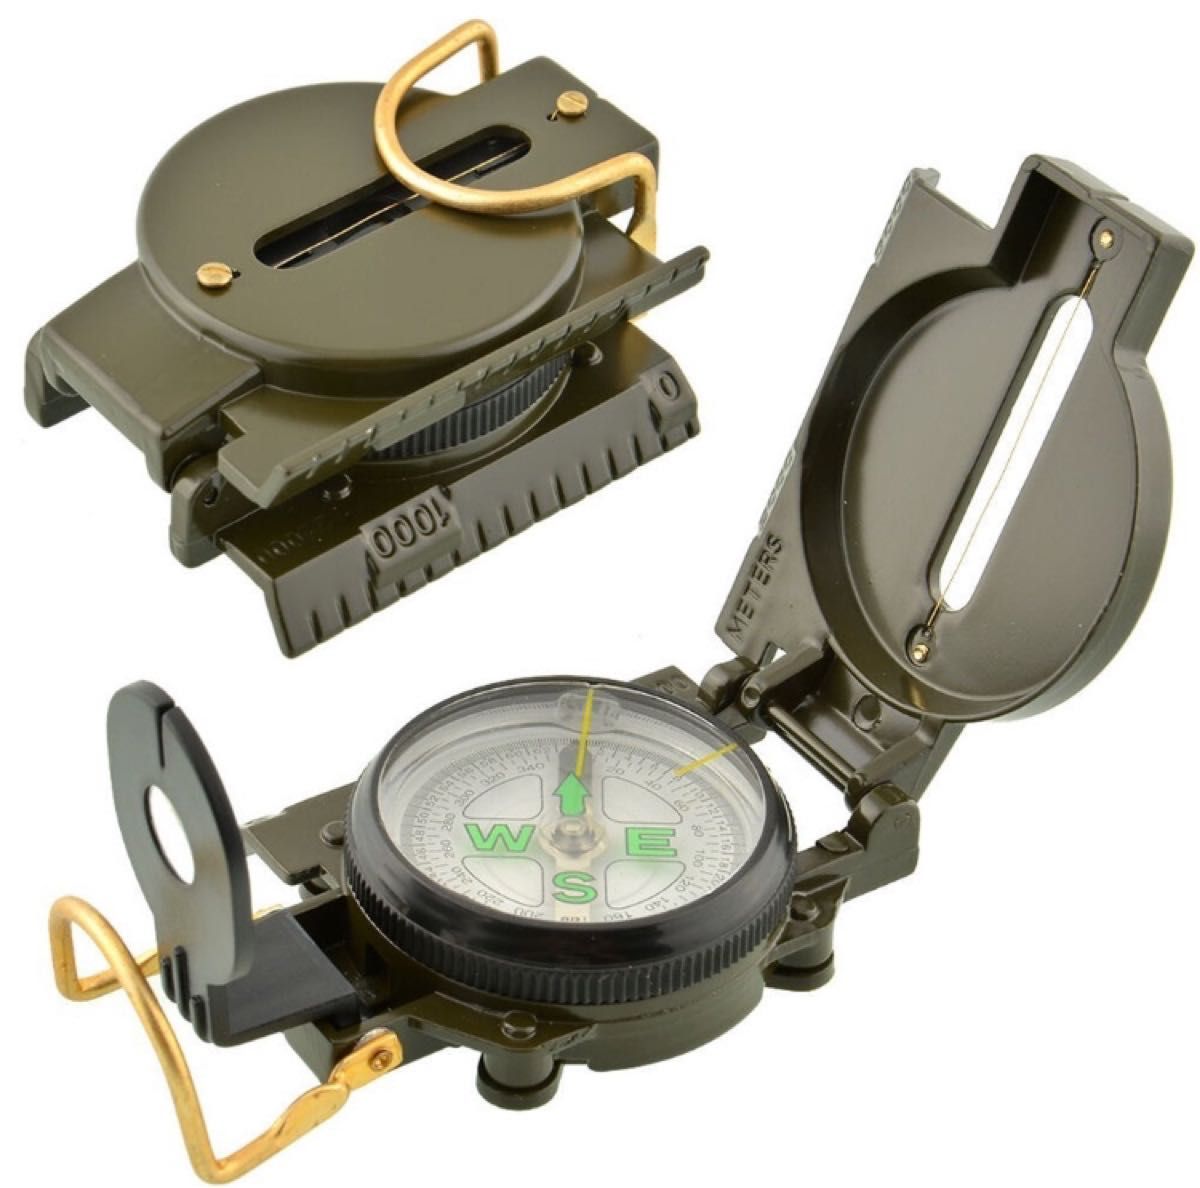 Lensatic Compass レンザティックコンパス 方位磁石 コンパス